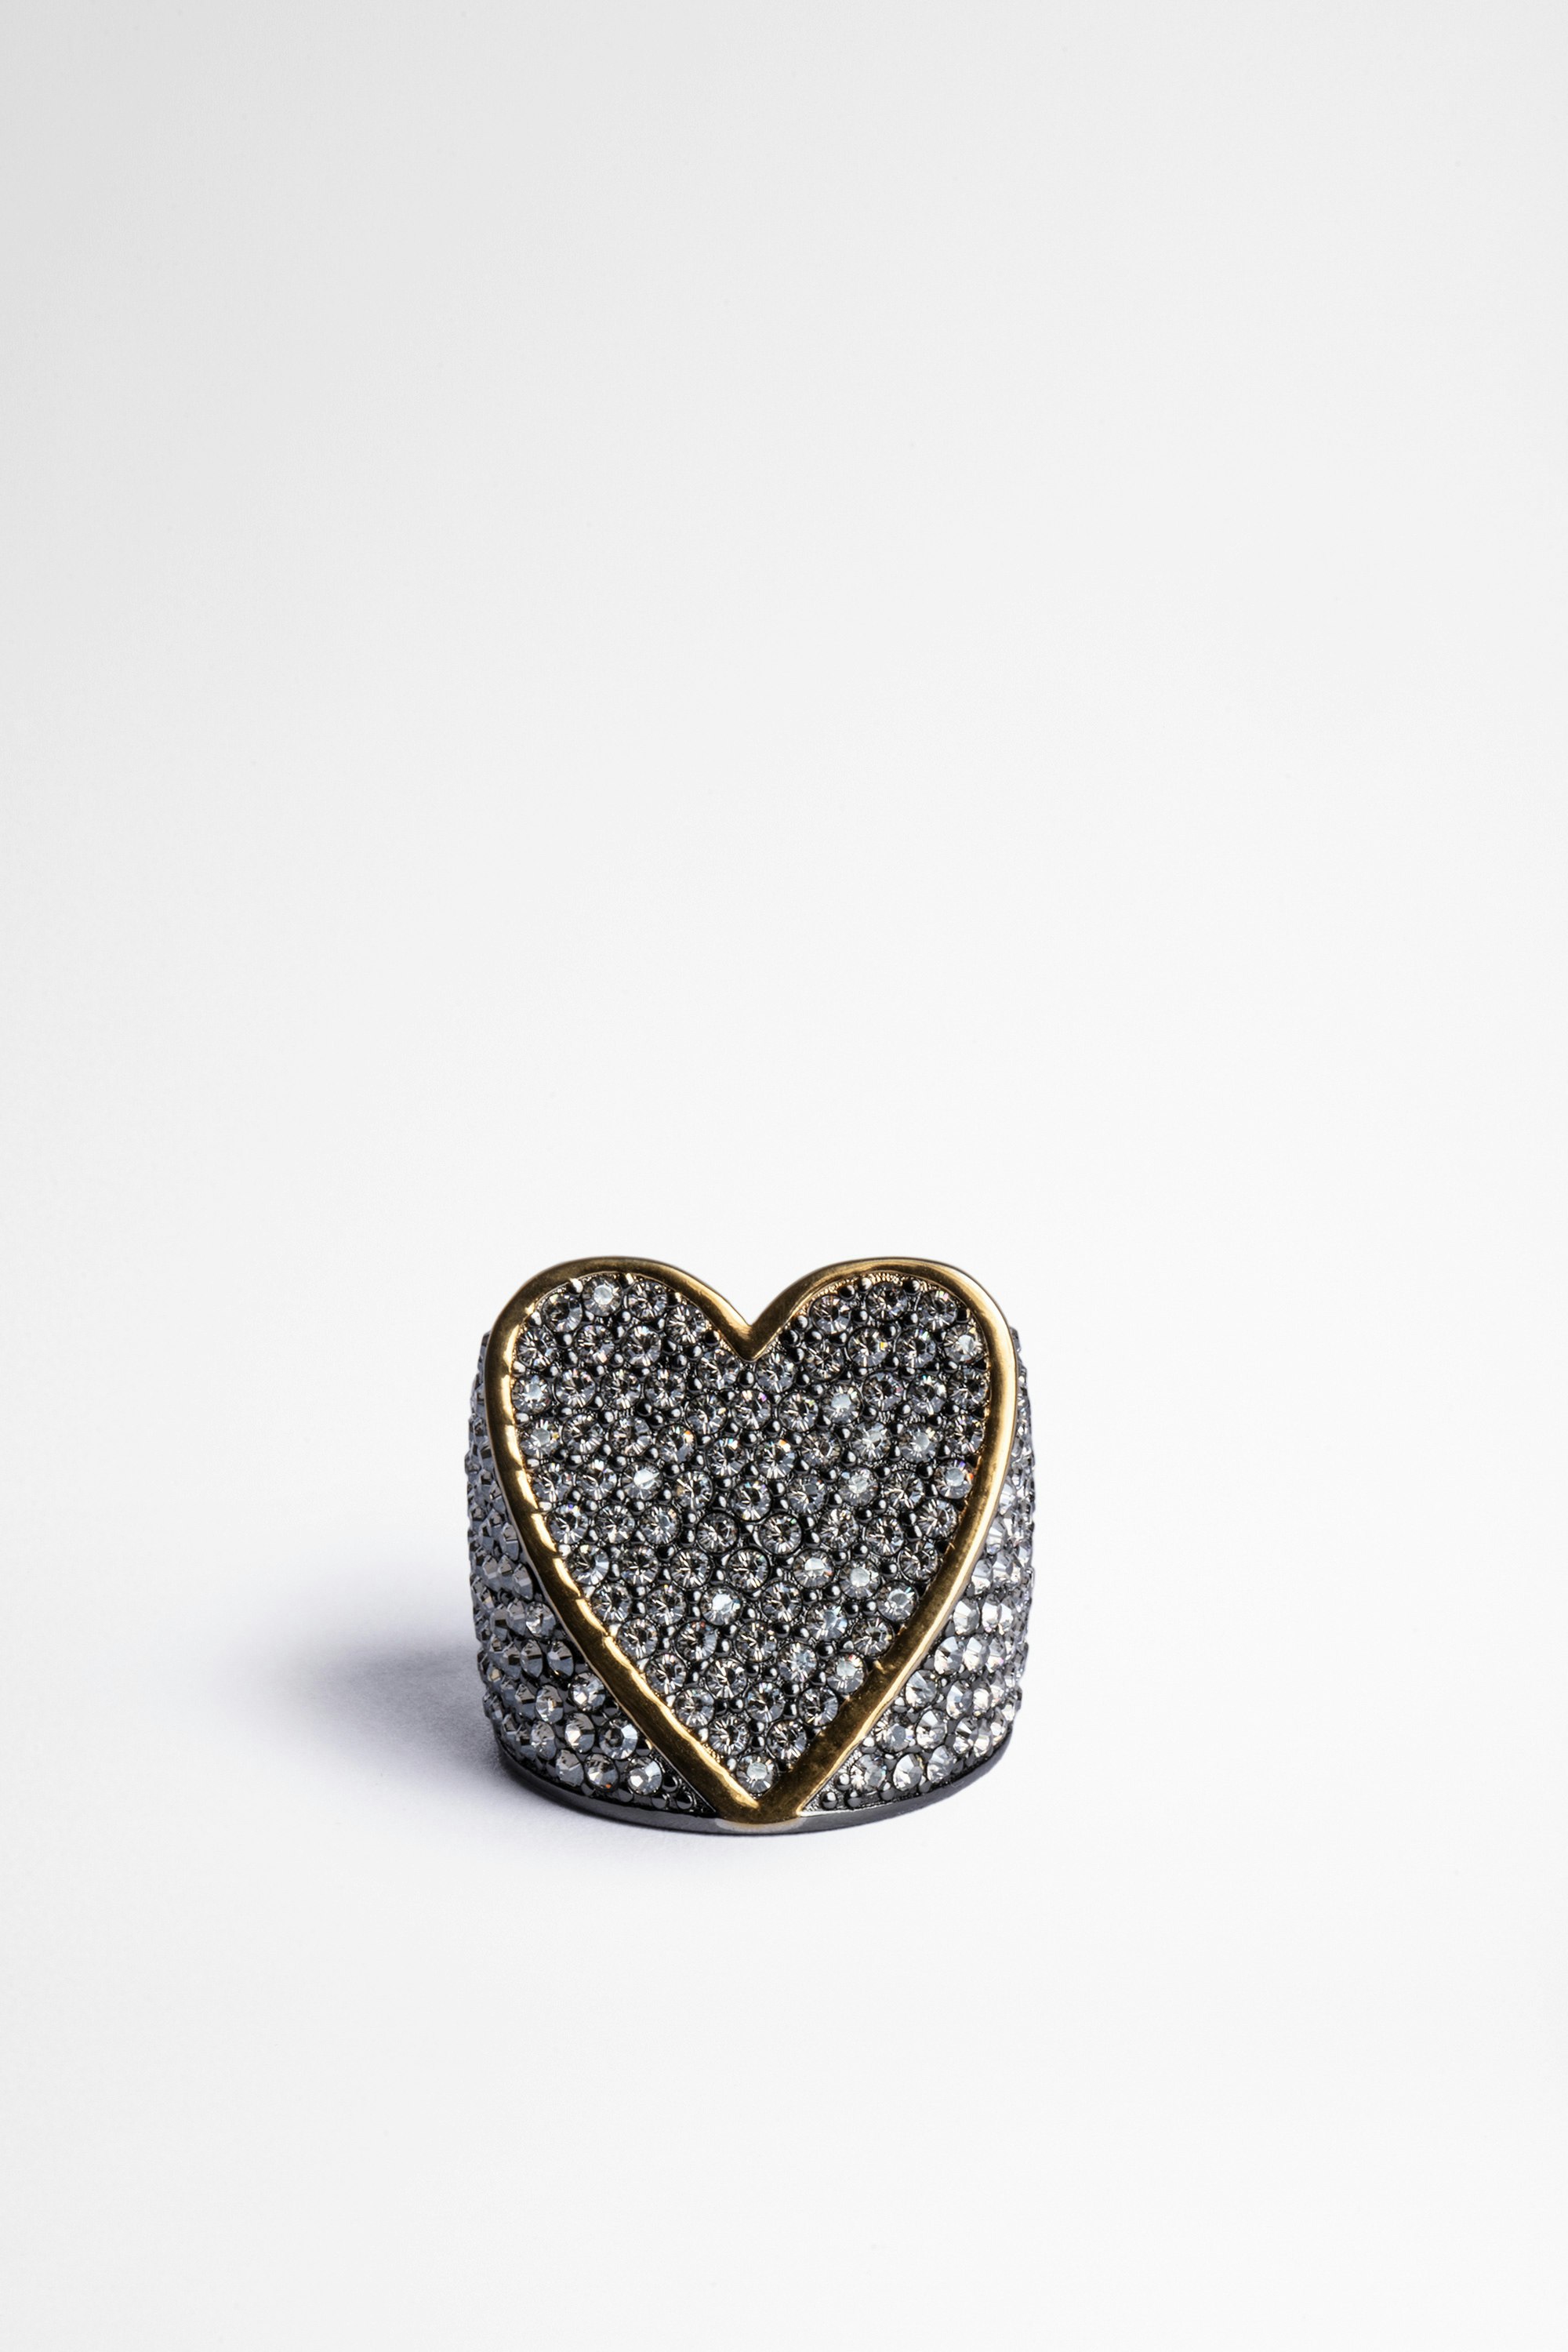 Idol Strass 指輪 Women's brass heart ring with rhinestones